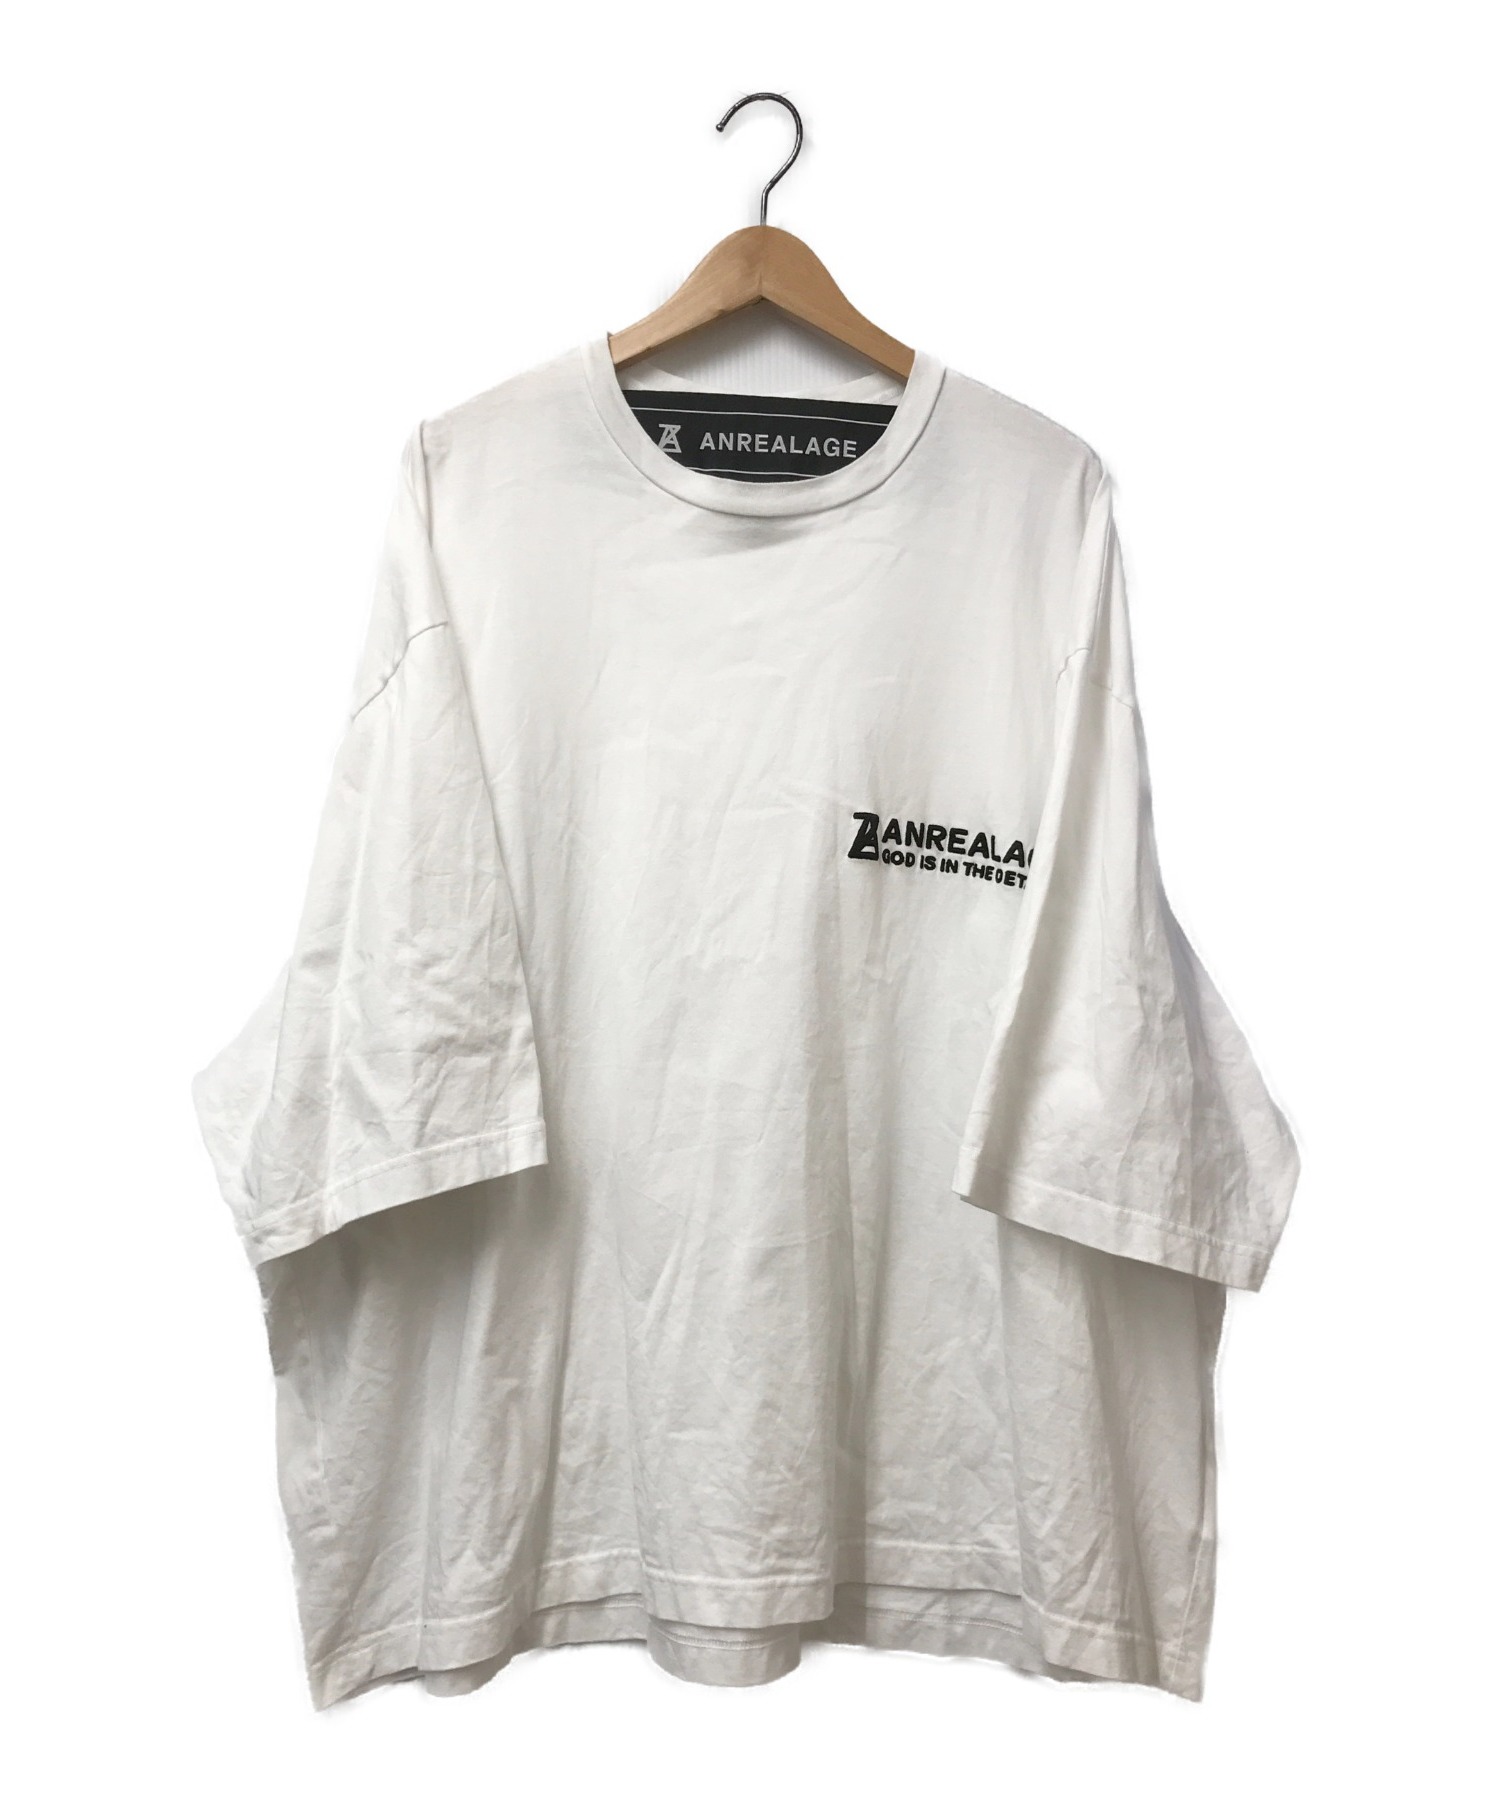 ANREALAGE (アンリアレイジ) オーバーサイズワンポイントTシャツ ホワイト サイズ:M 20SS ZOOM ONE POINT TEE  SHIRTS